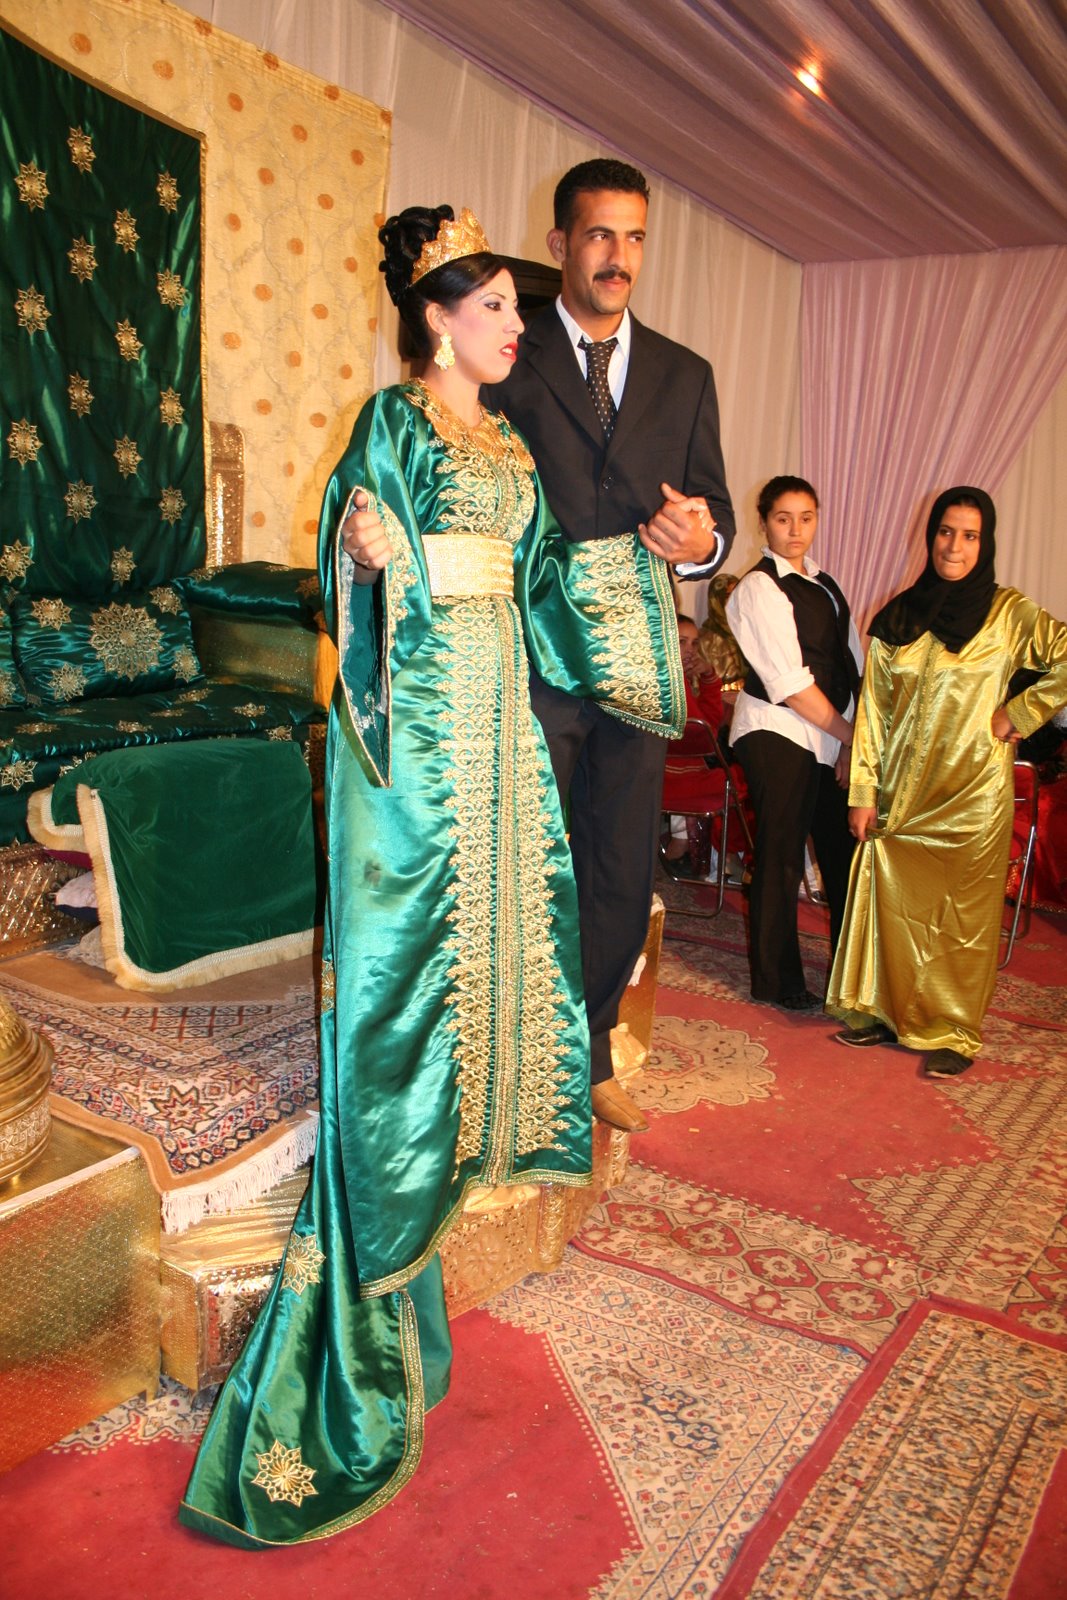 A Traditional Moroccan Wedding